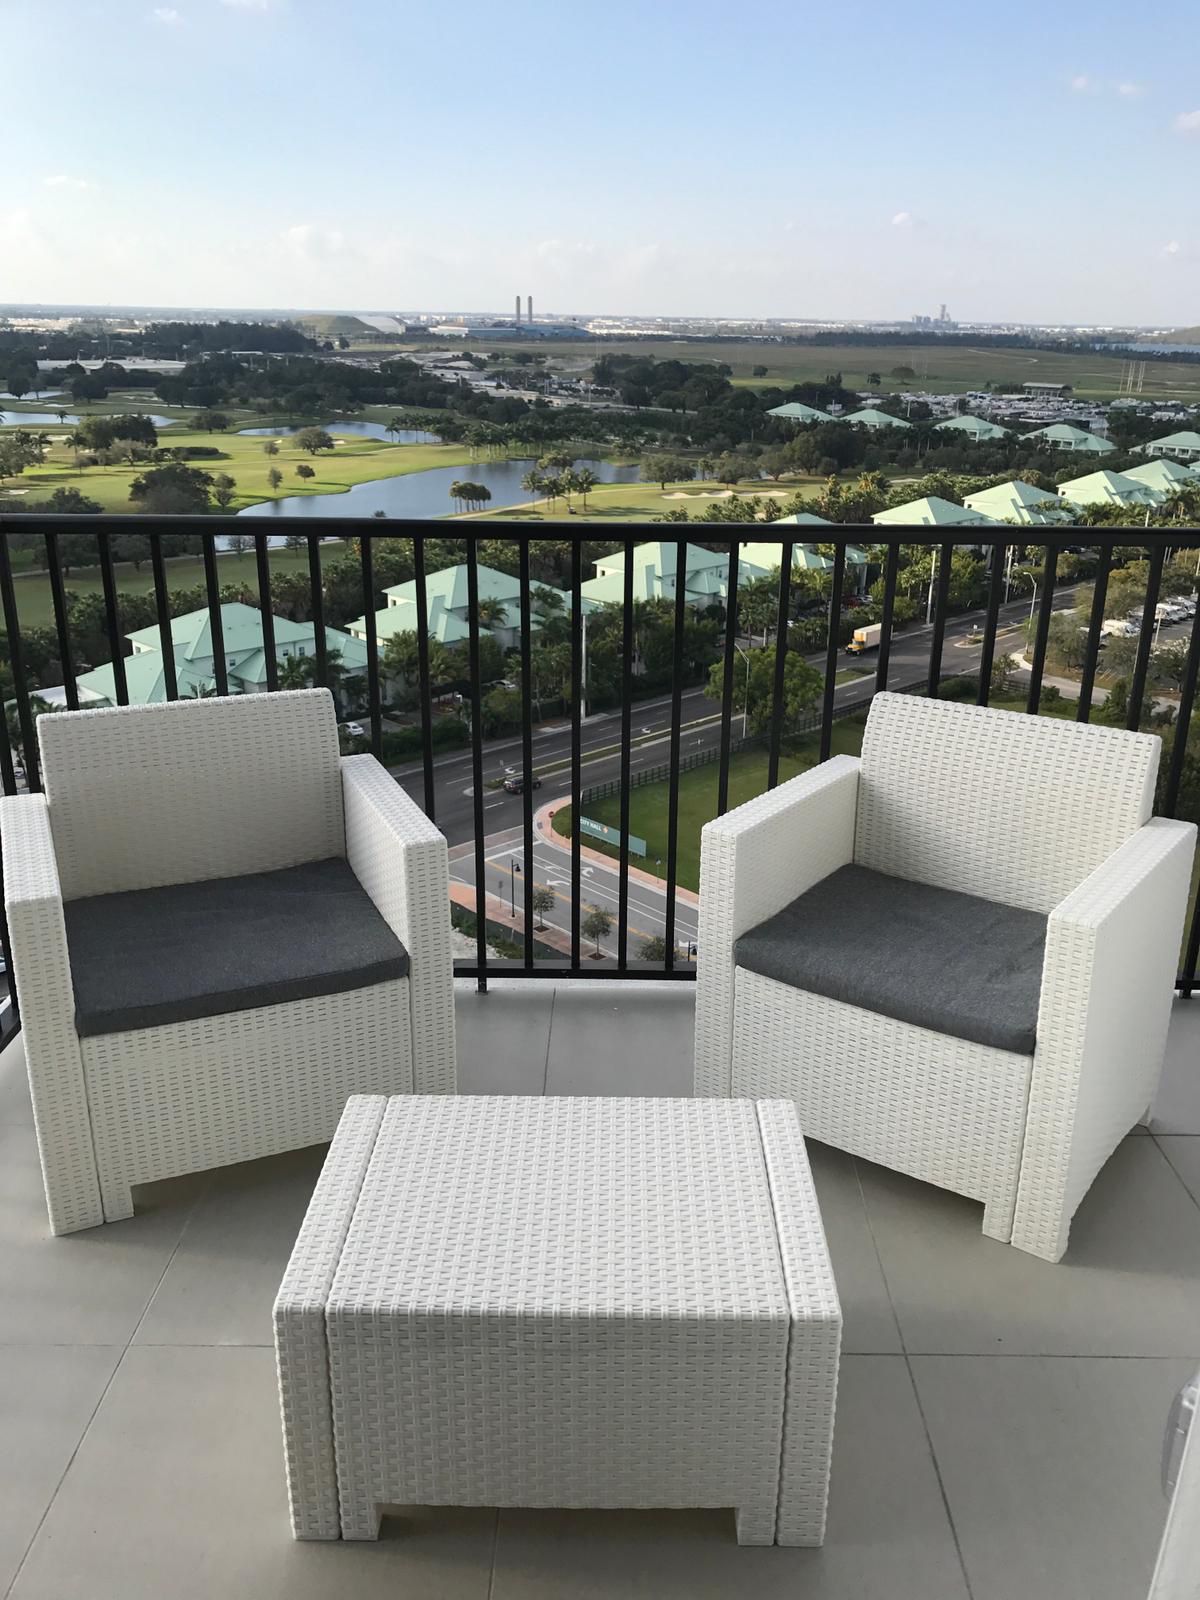 Furniture / Patio furniture / outdoor furniture / Muebles de patio /patio set / conversation set